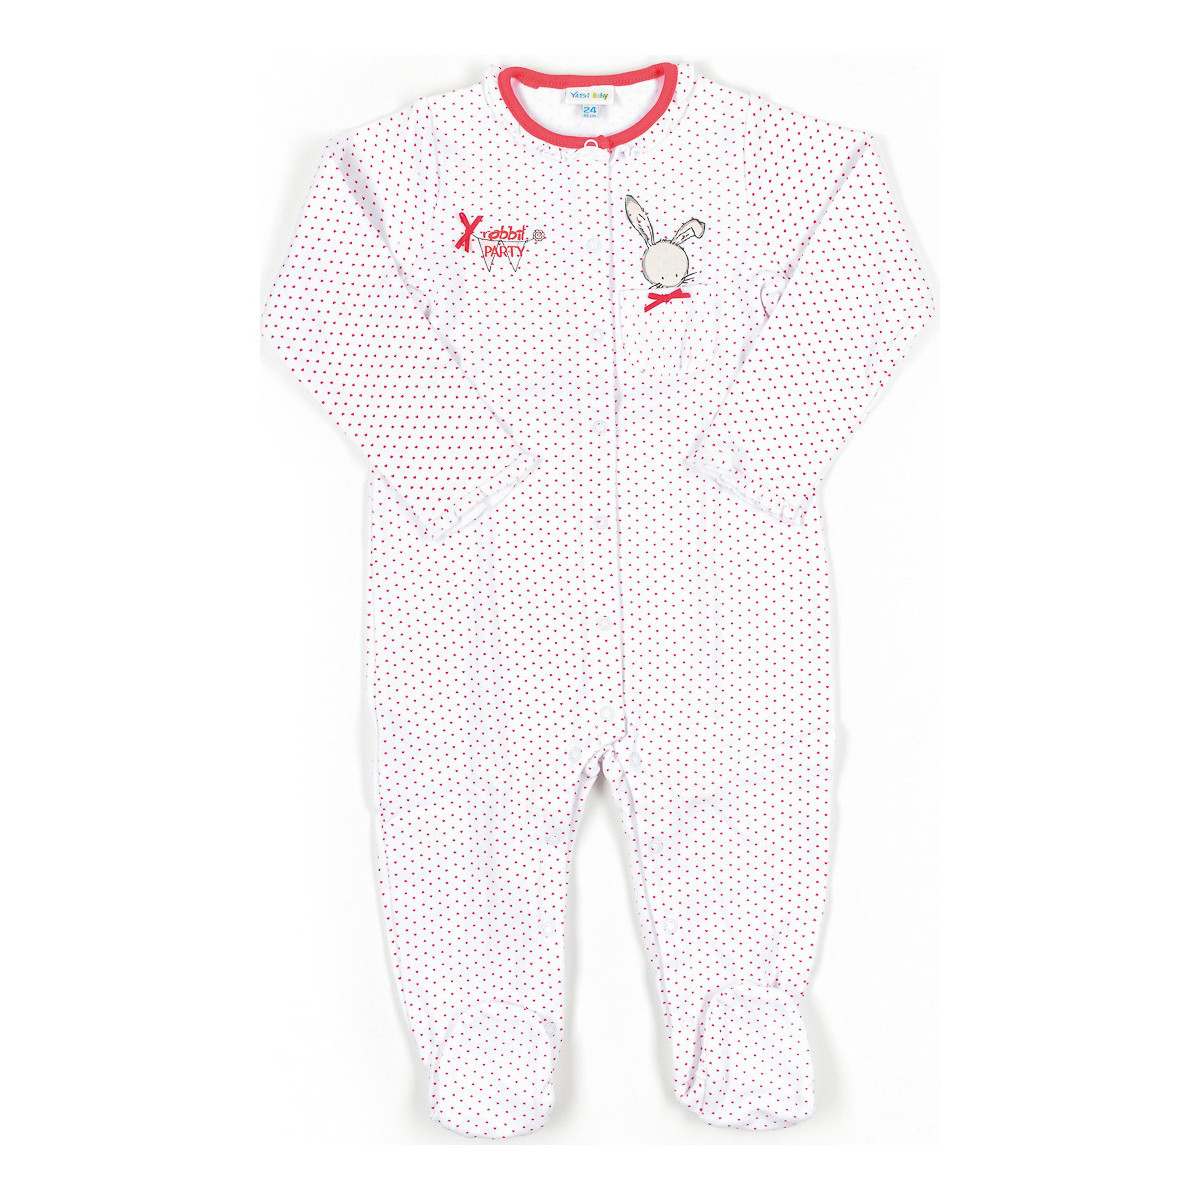 textil Børn Pyjamas / Natskjorte Yatsi 8084-BLANCO Flerfarvet